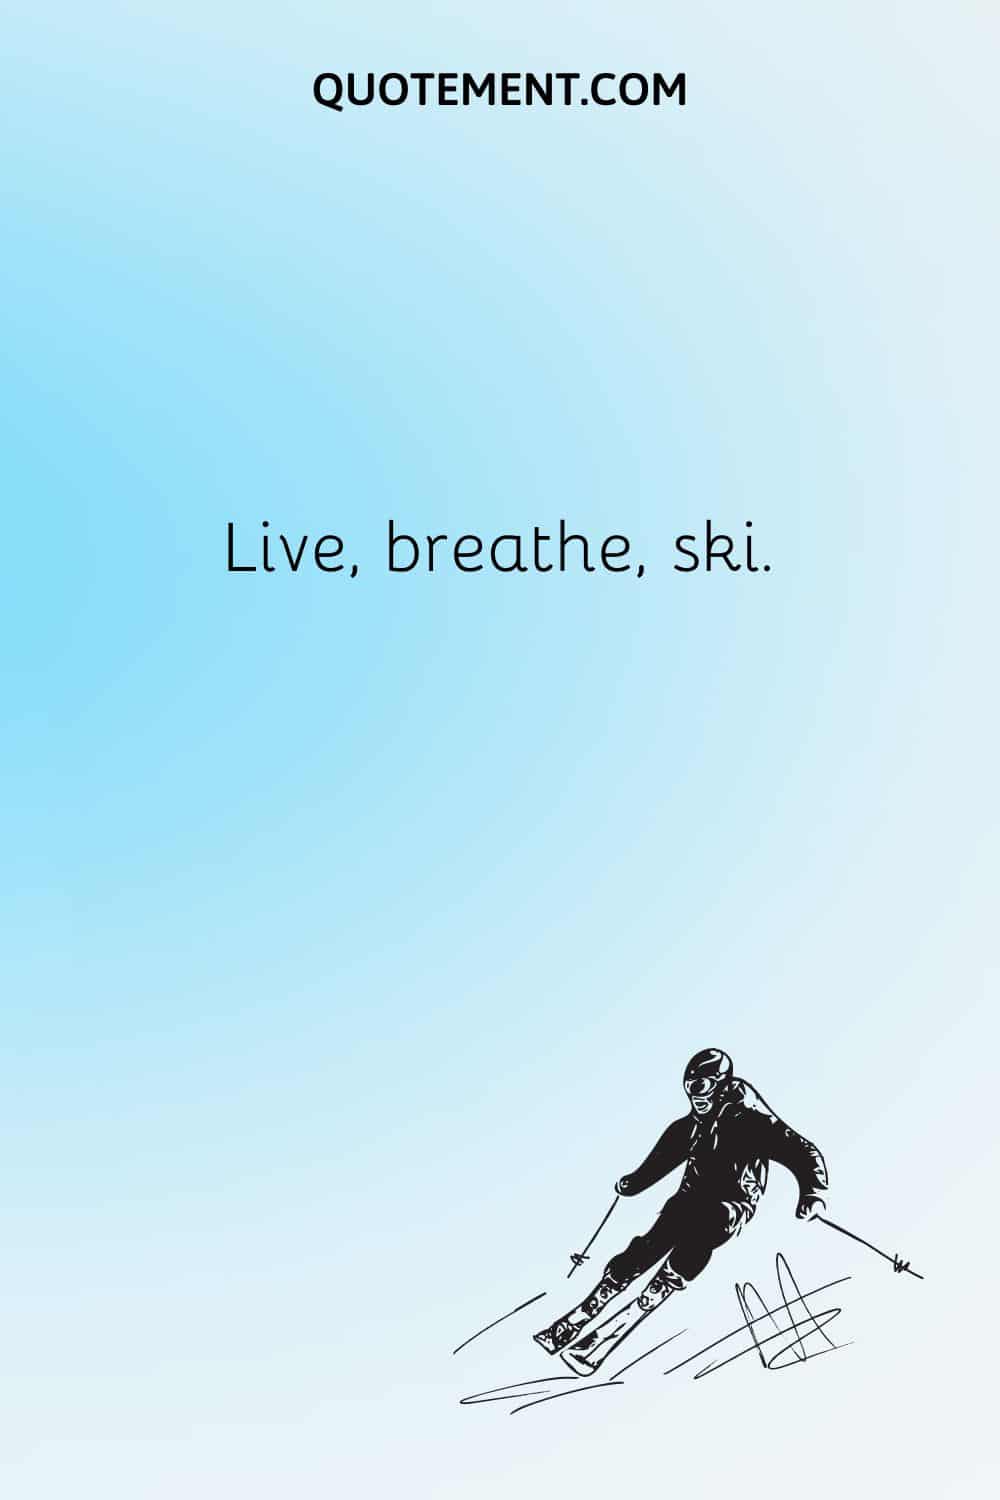 Live, breathe, ski.